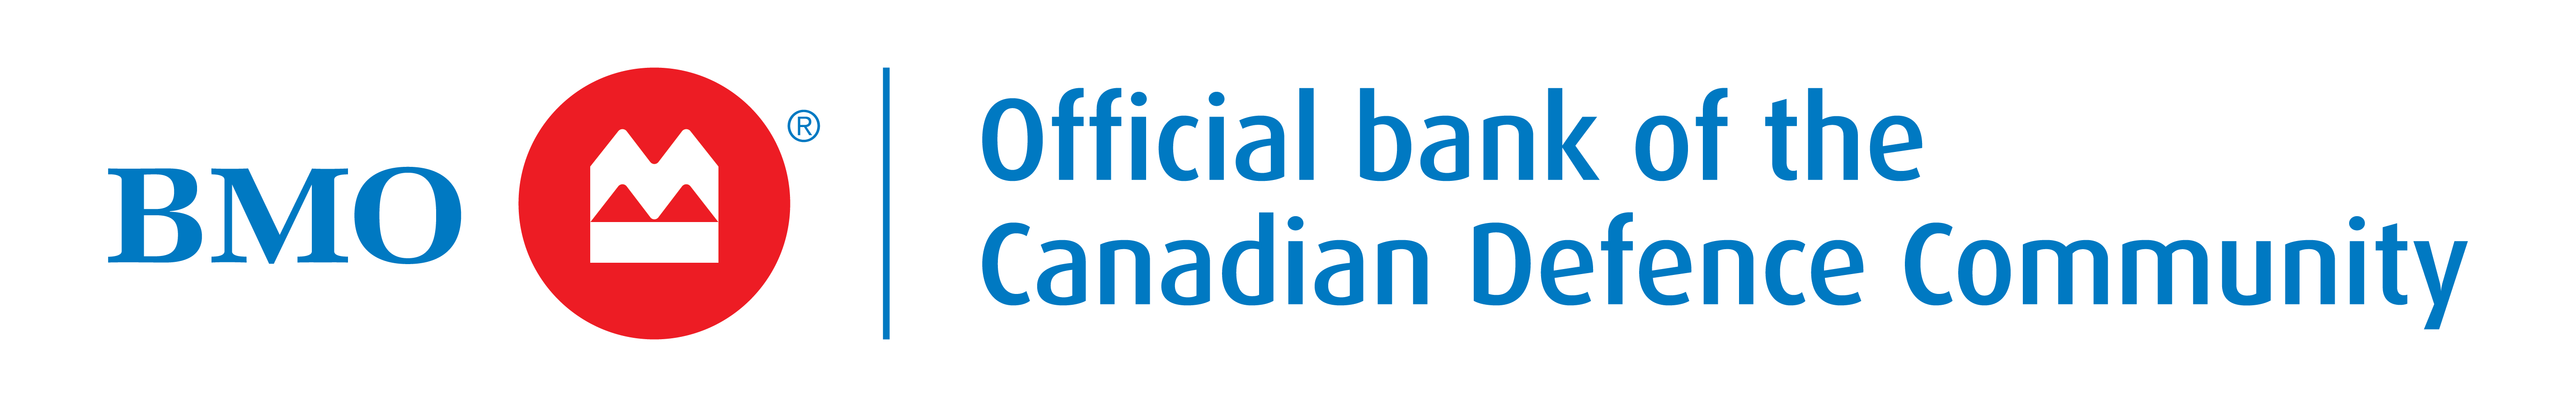 Got that bank. BMO Bank logo. Bank of Montreal лого. Bank of Montreal логотип PNG. Royal Bank of Canada logo PNG.